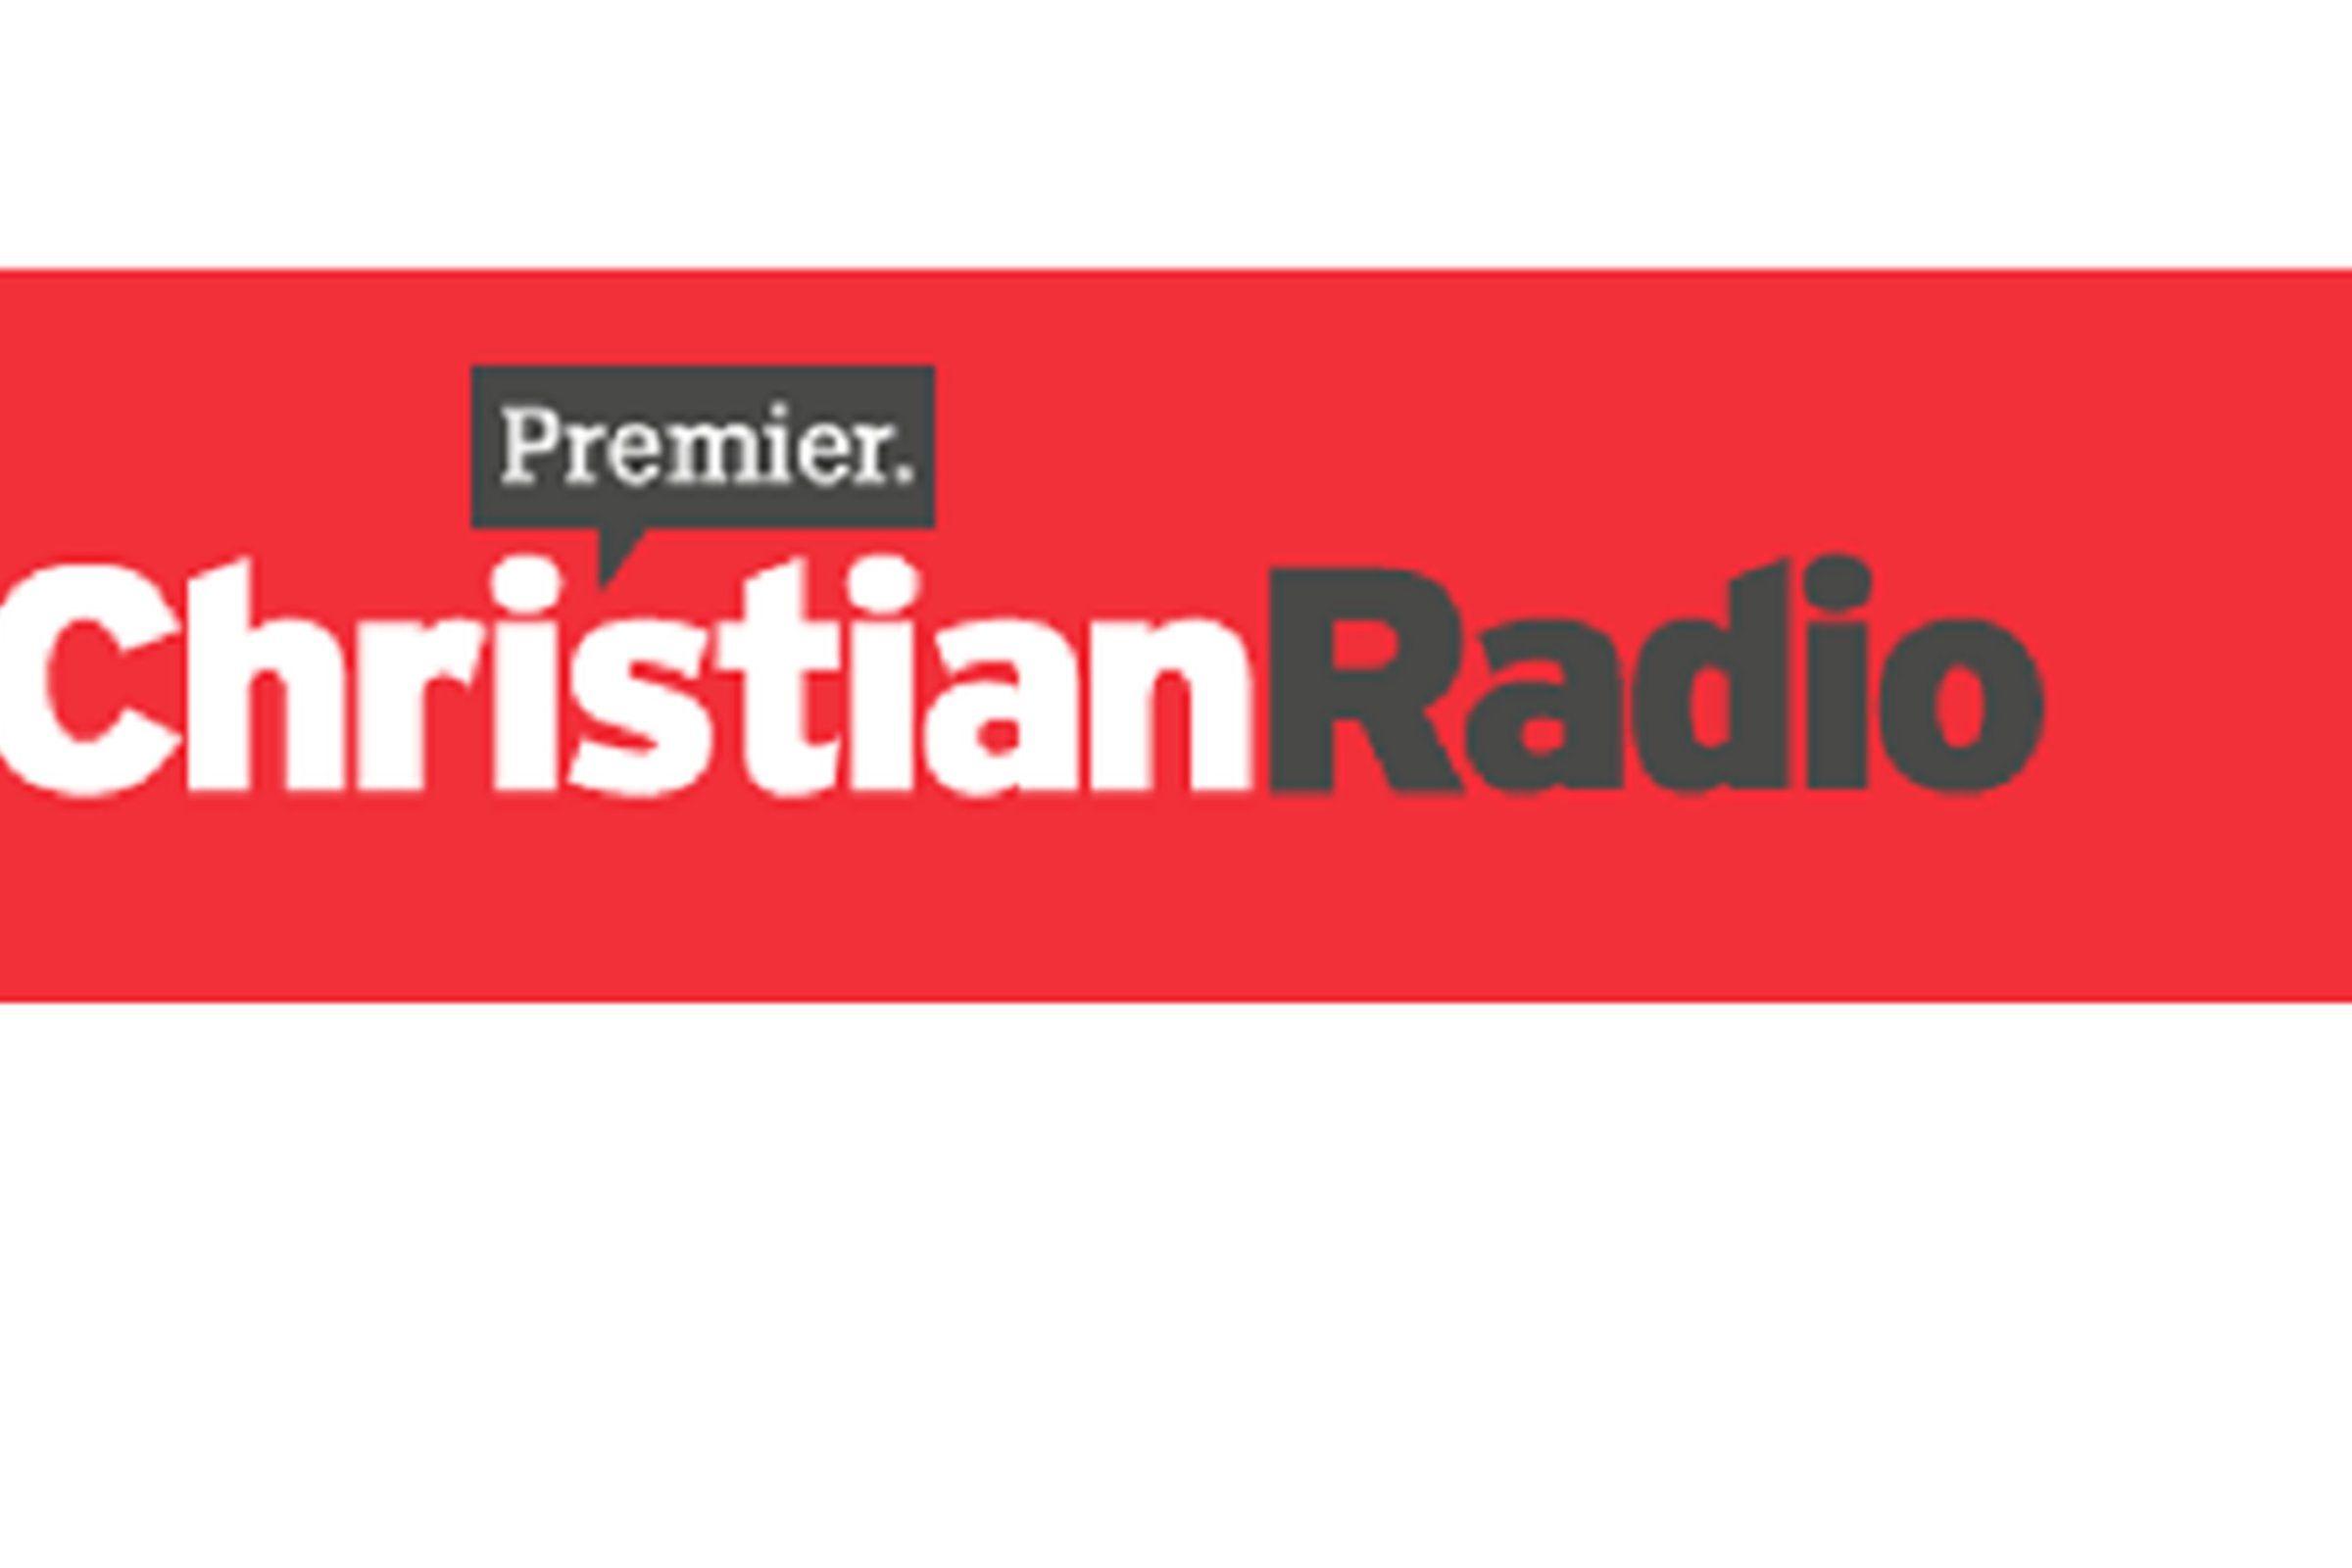 Christian Radio Logo - Premier Christian Radio: The News Hour - Theos Think Tank ...